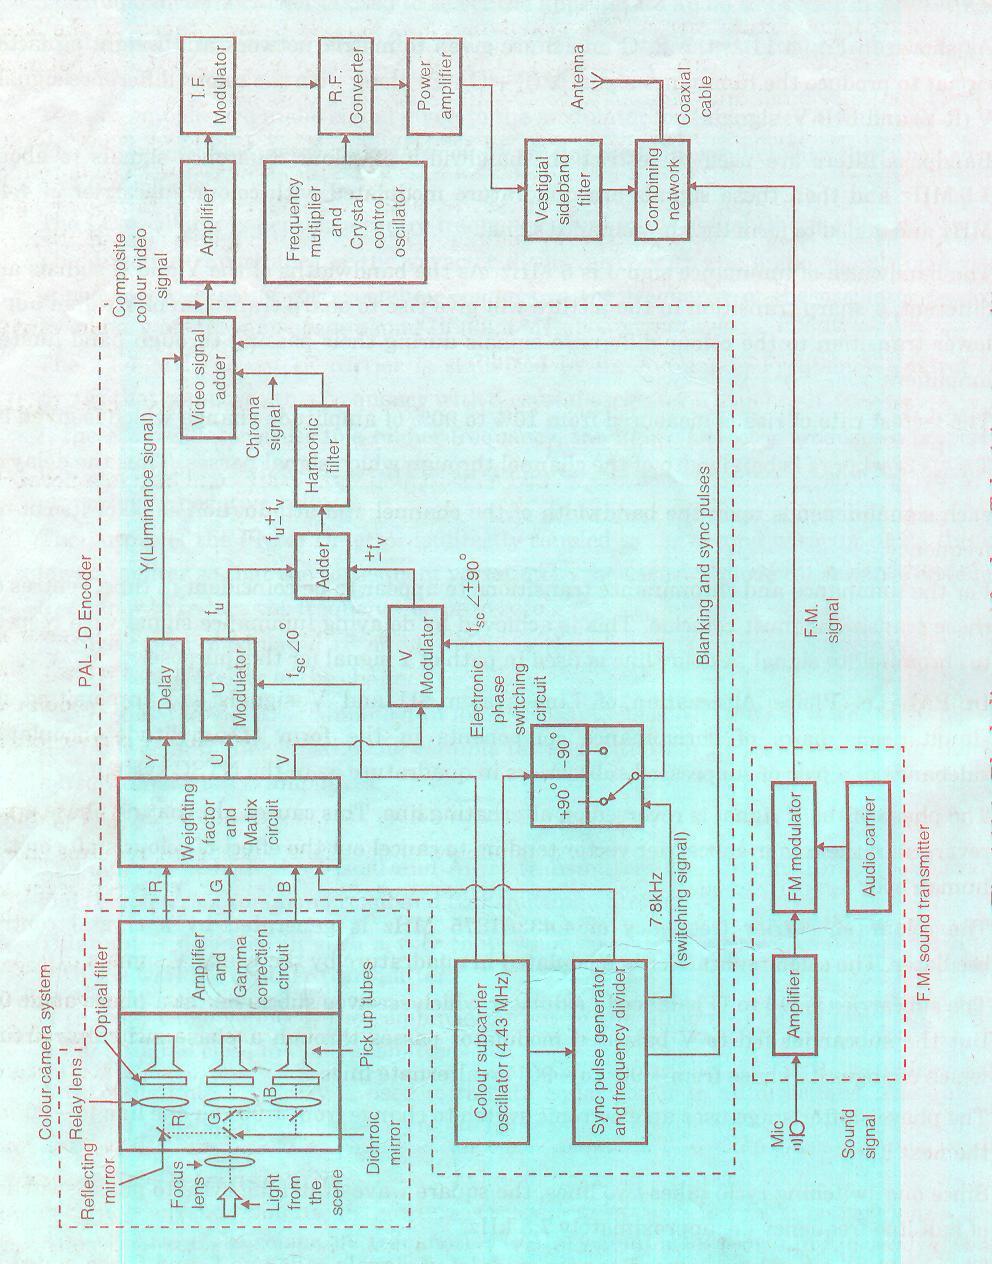 b) Draw the block diagram of Colour TV Transmitter.